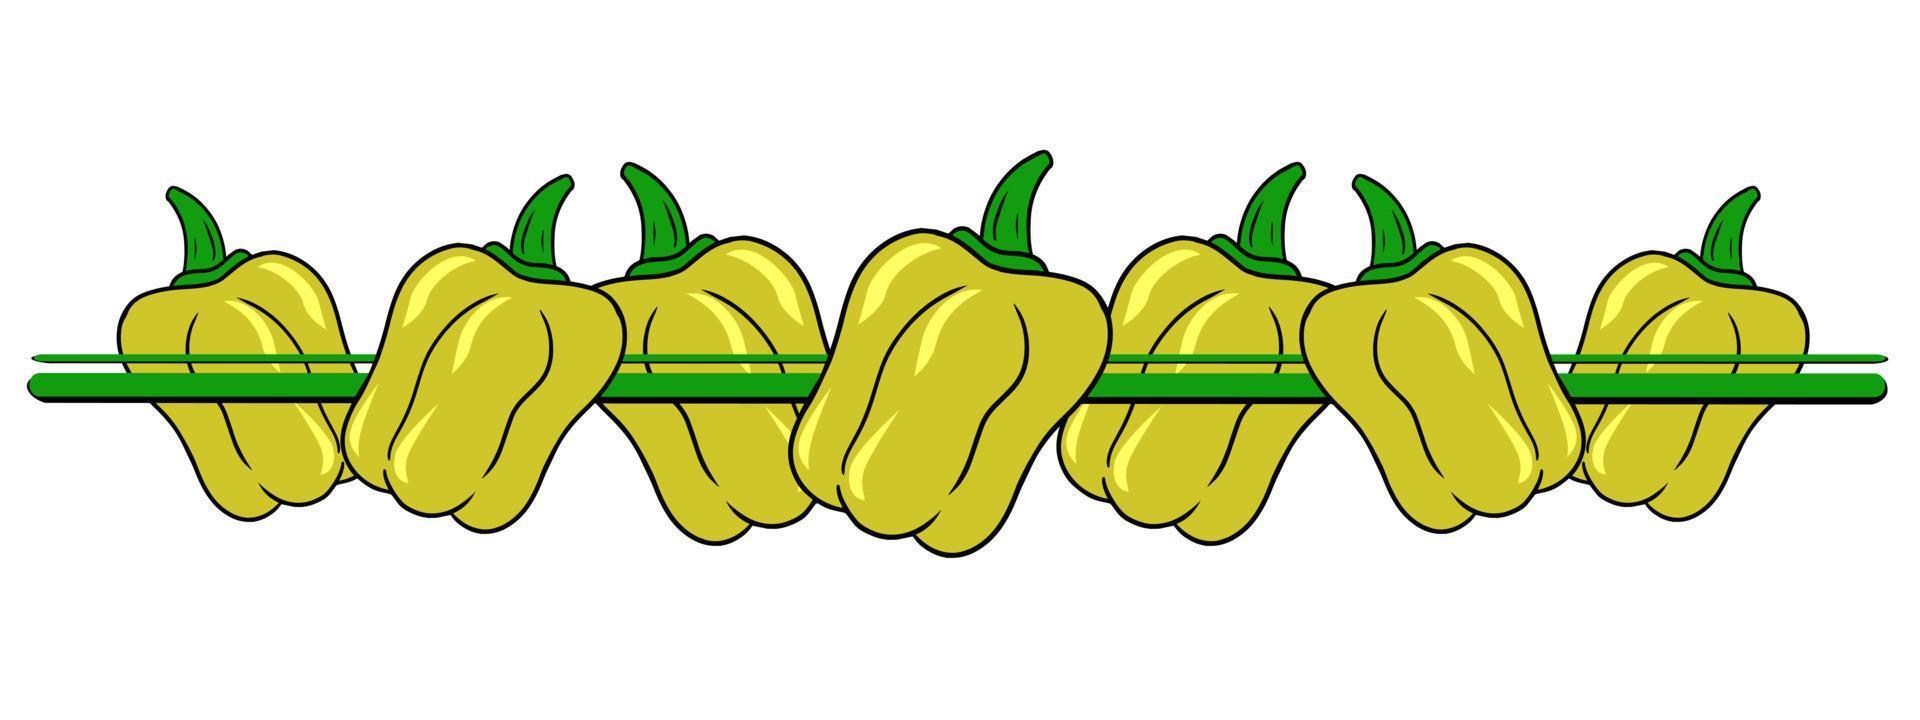 Horizontal border, edge, bright yellow ripe vegetables, pepper, vector illustration in cartoon style